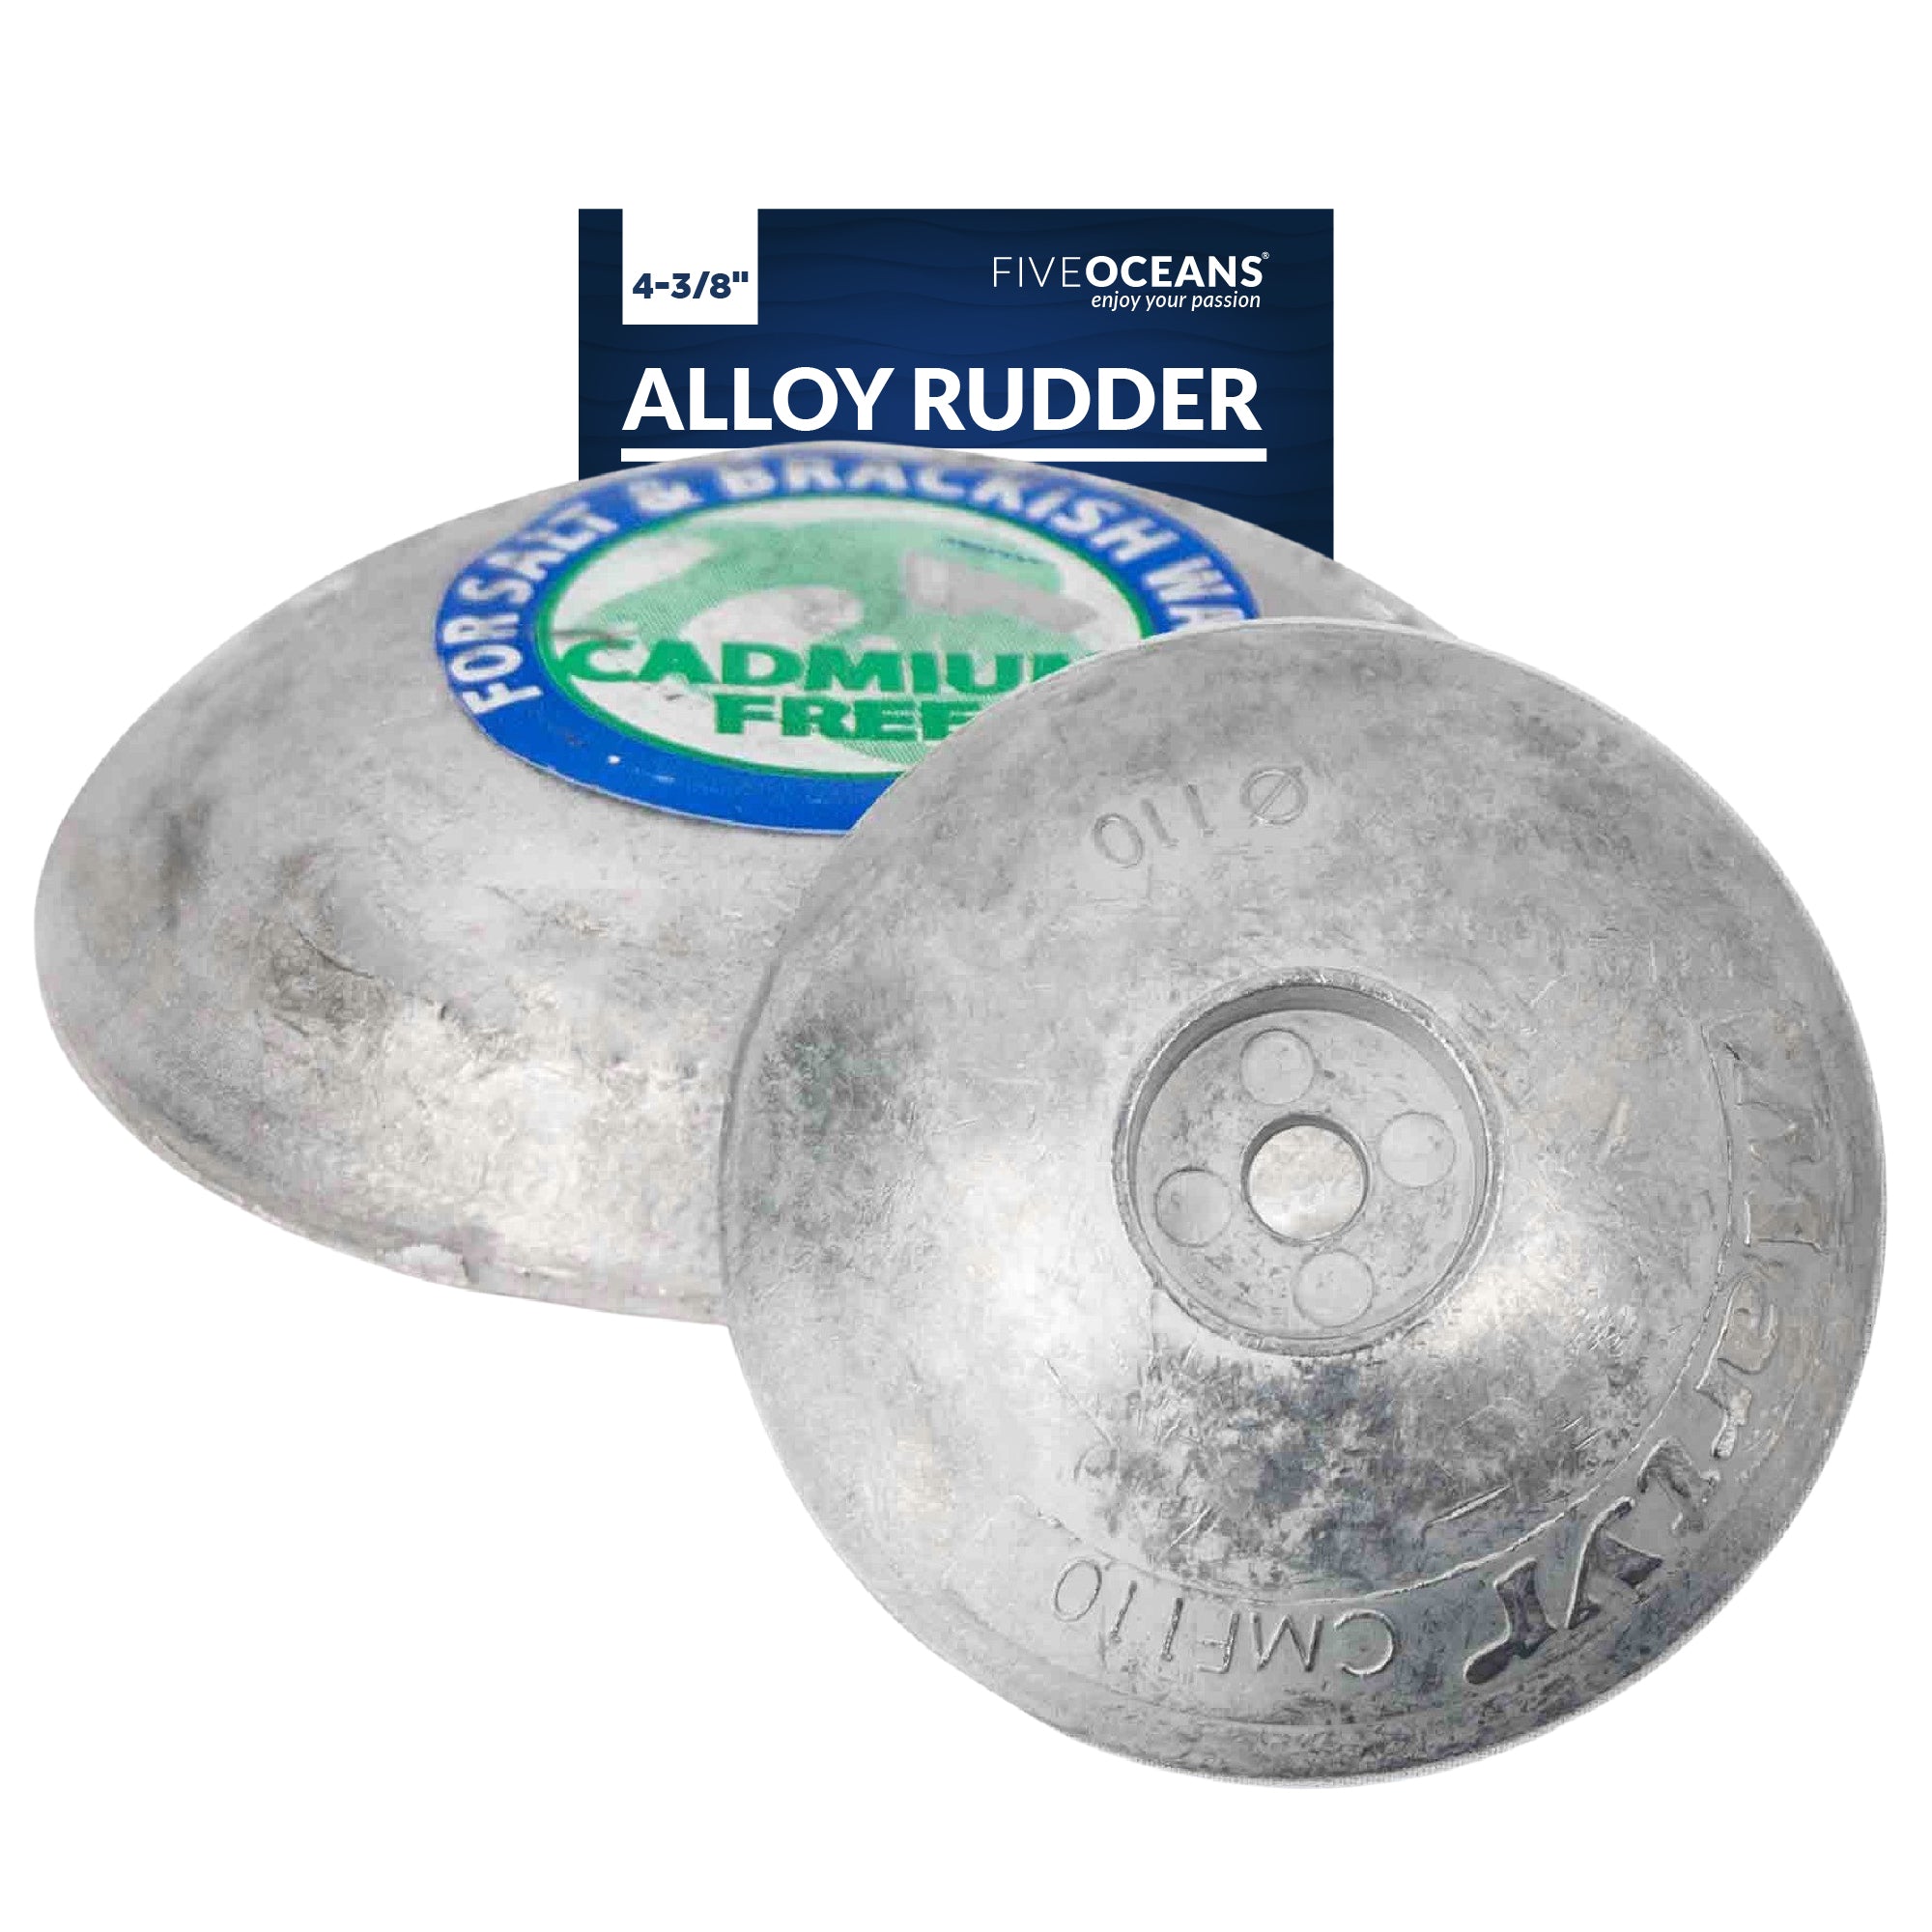 Alloy Rudder/Trim Tab Disc Anode, Aluminum , 4-3/8", 2-pack - FO4172-M2